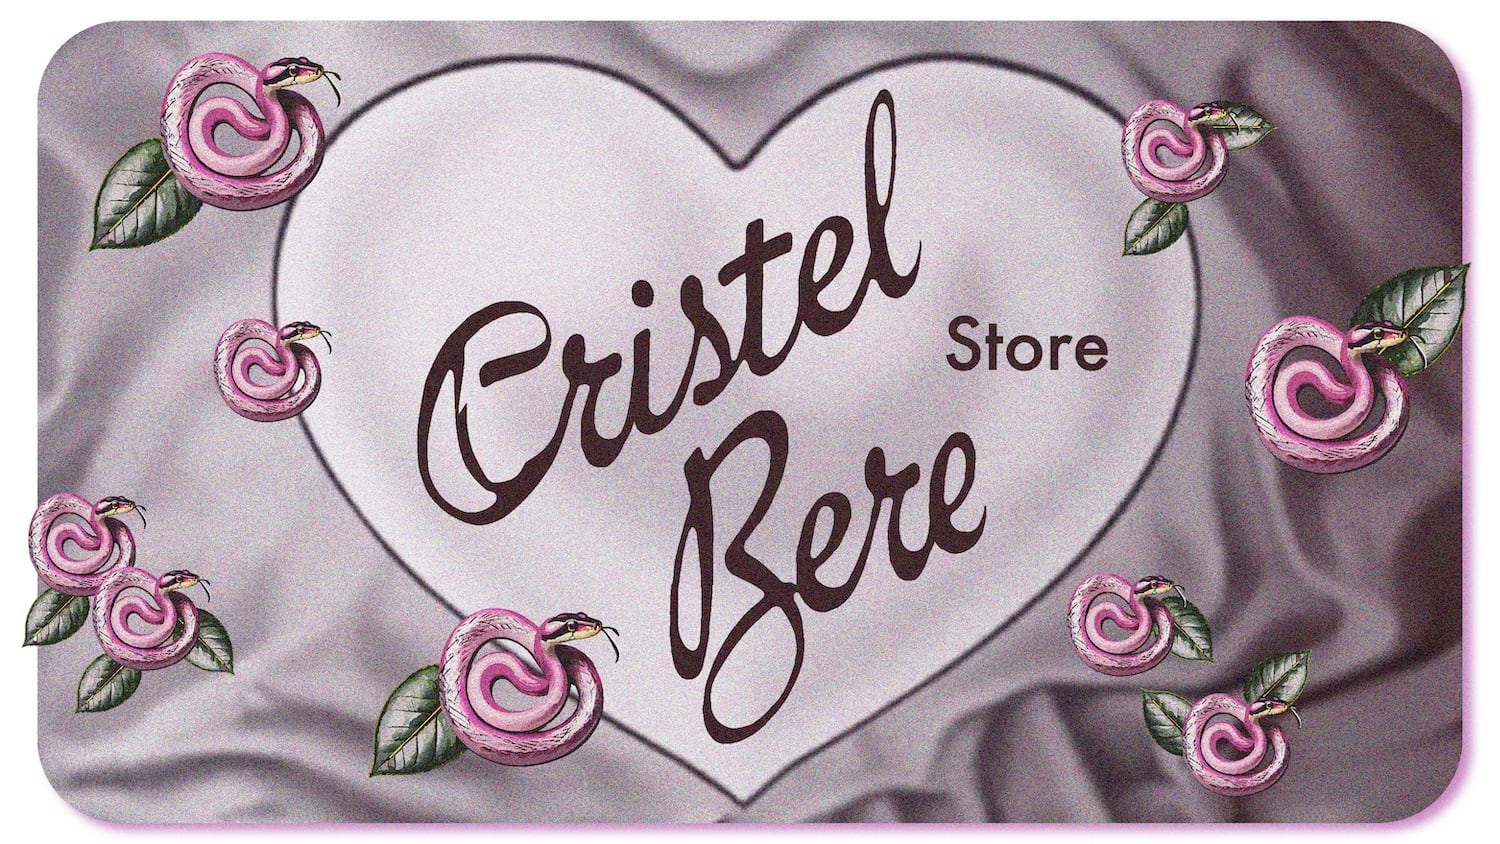 Cristel Bere Store